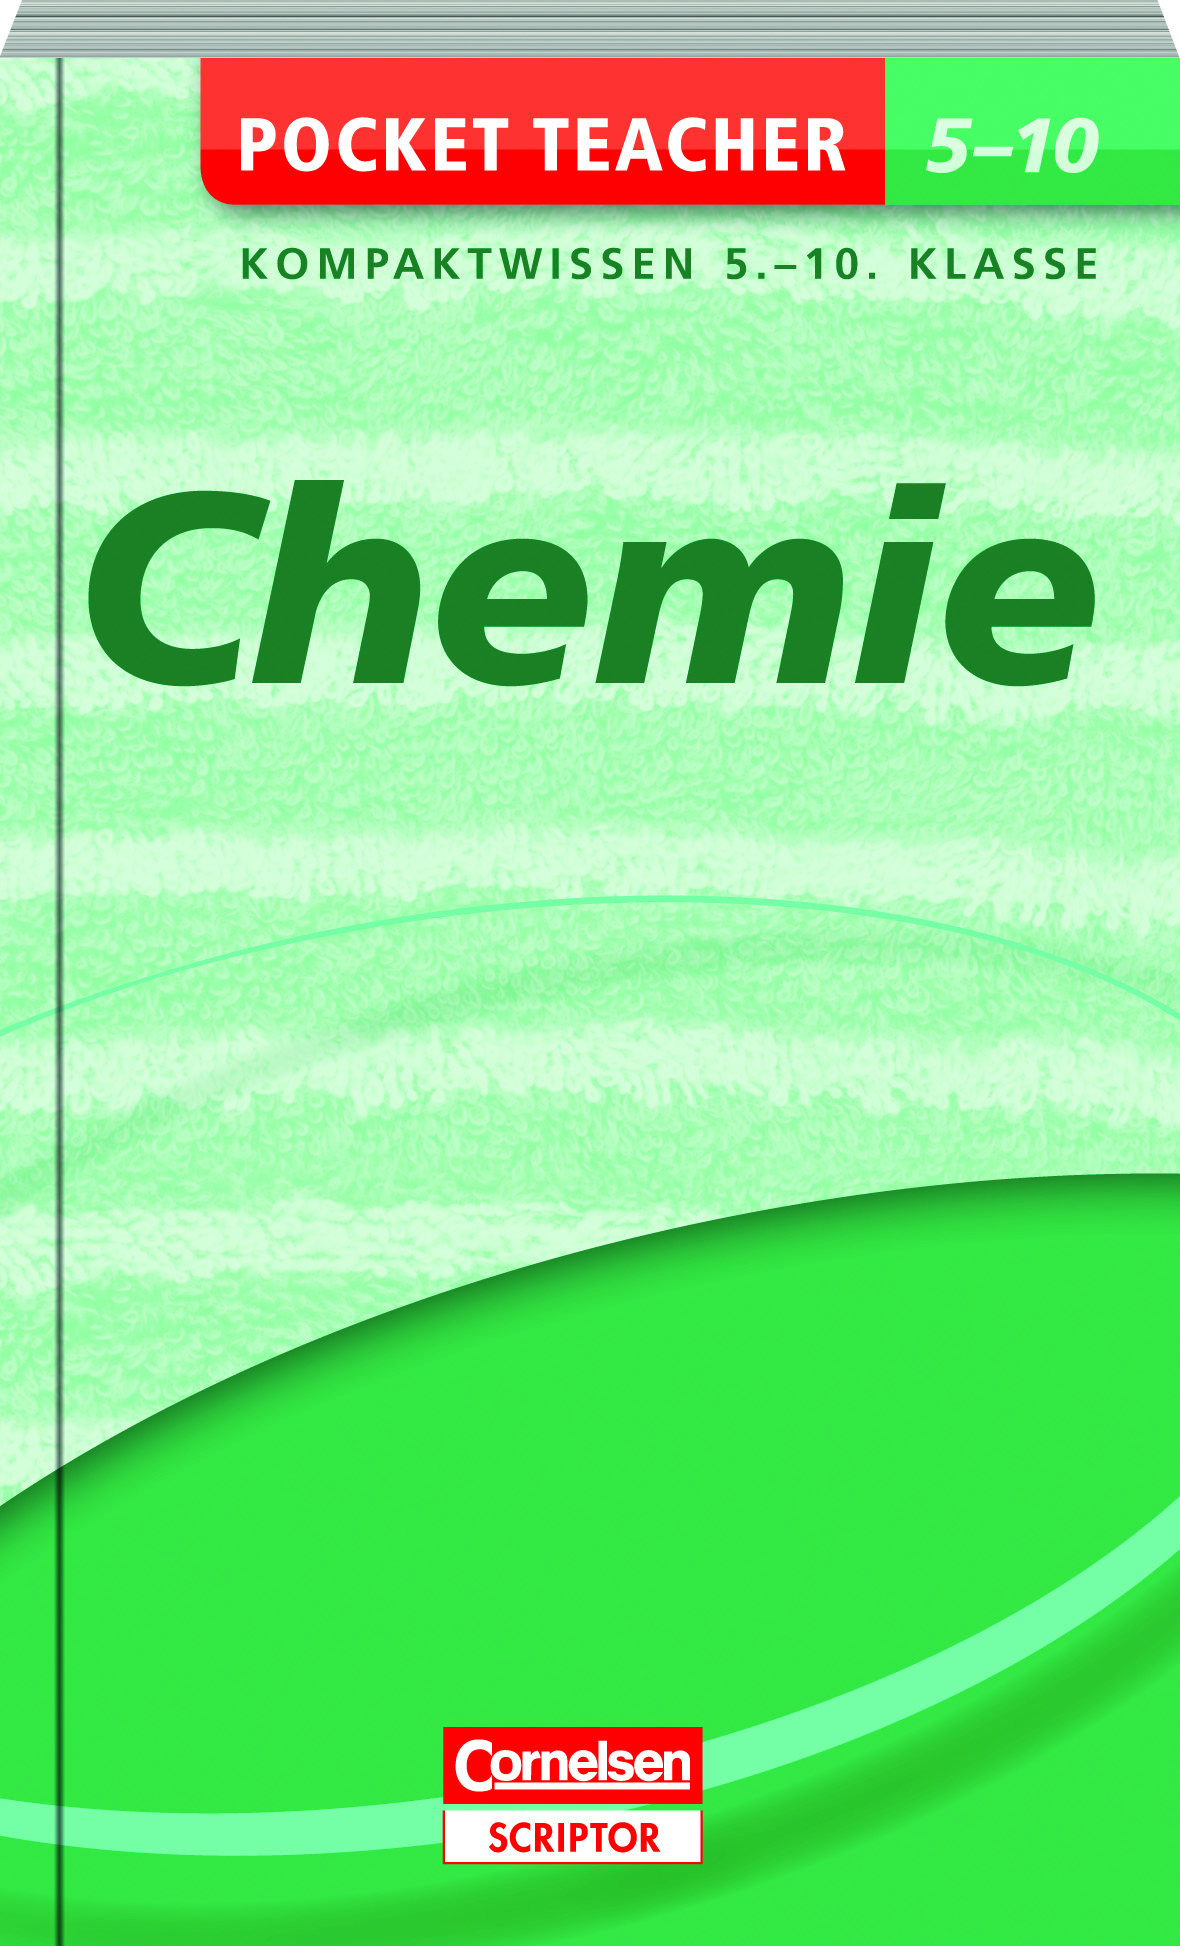 Pocket Teacher Chemie 5.-10. Klasse